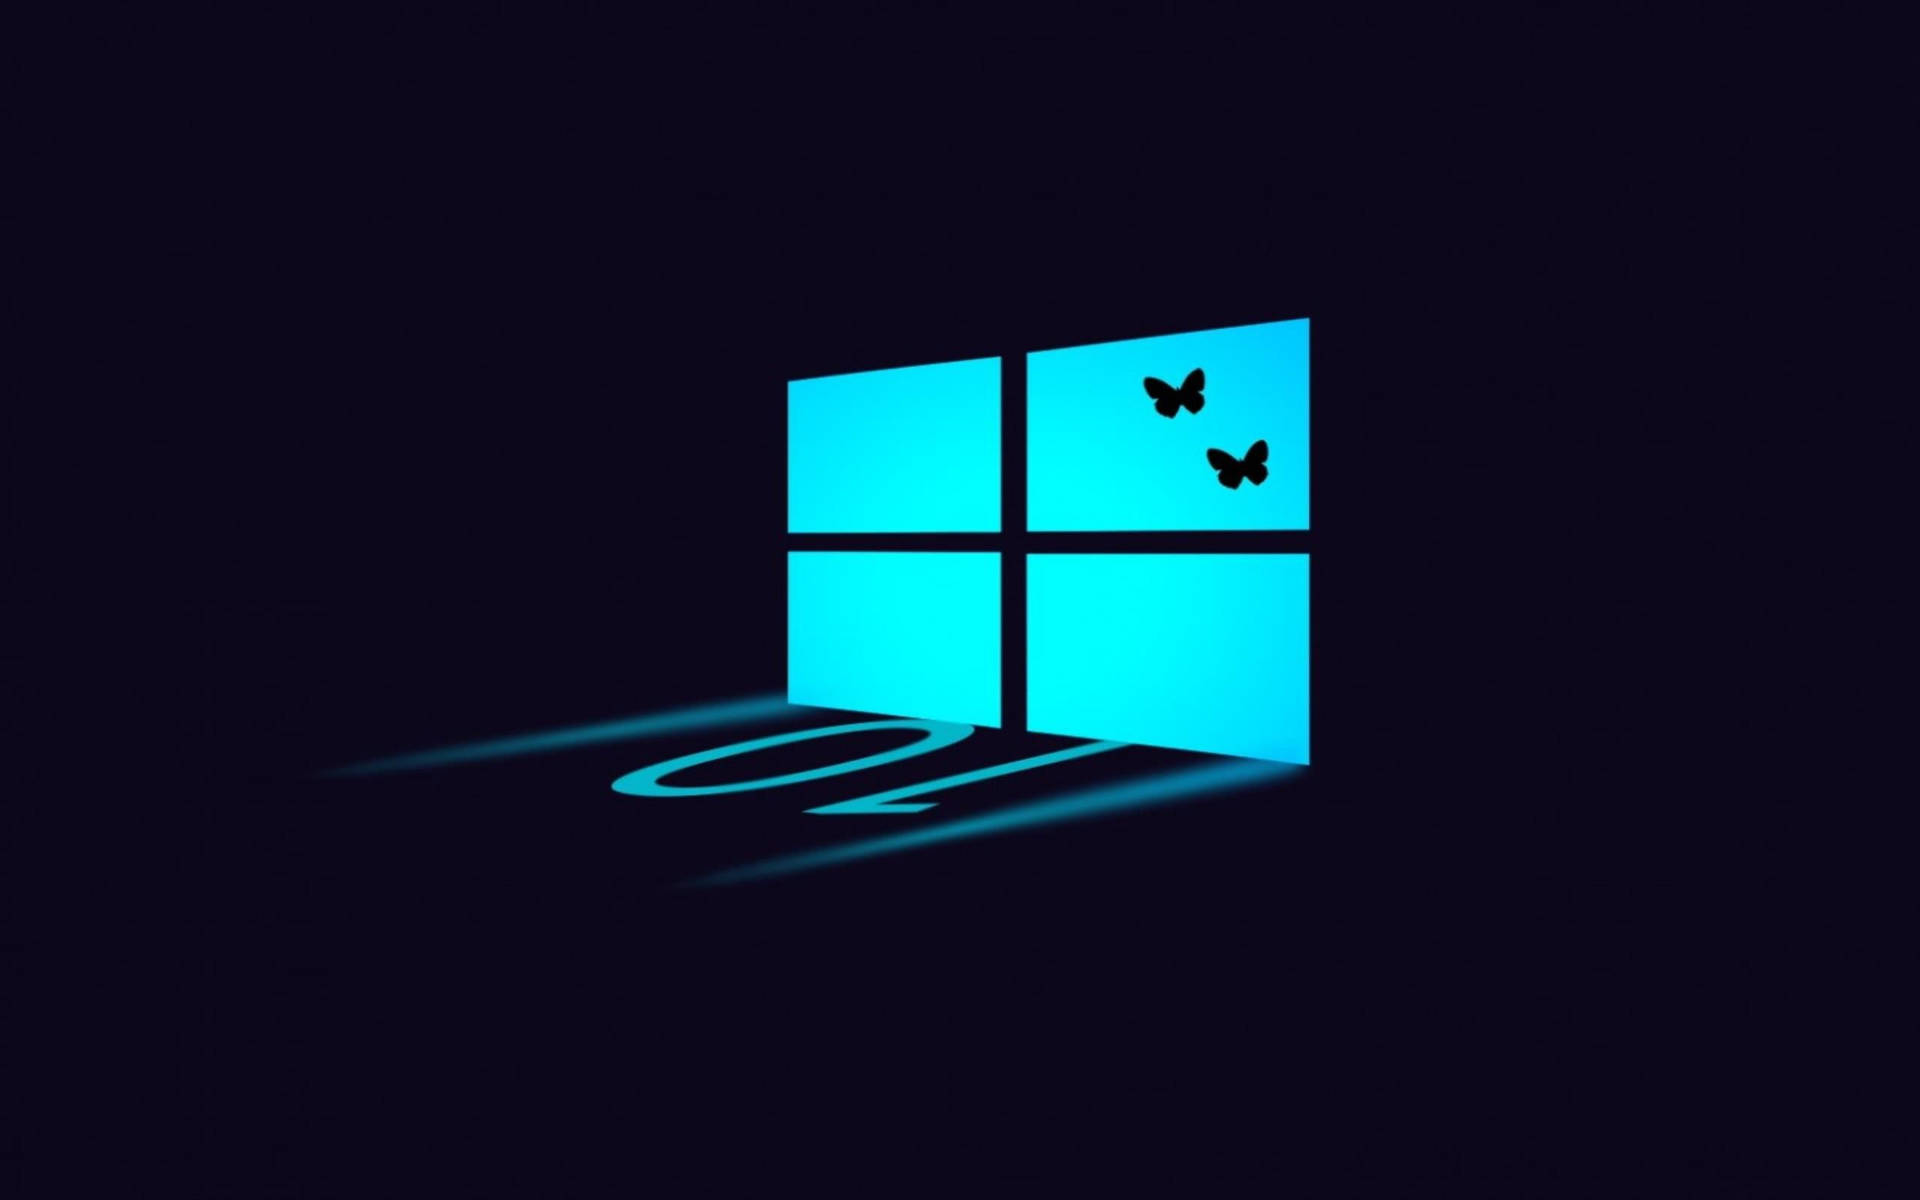 Free Windows 10 Hd Wallpaper Downloads, [100+] Windows 10 Hd Wallpapers for  FREE 